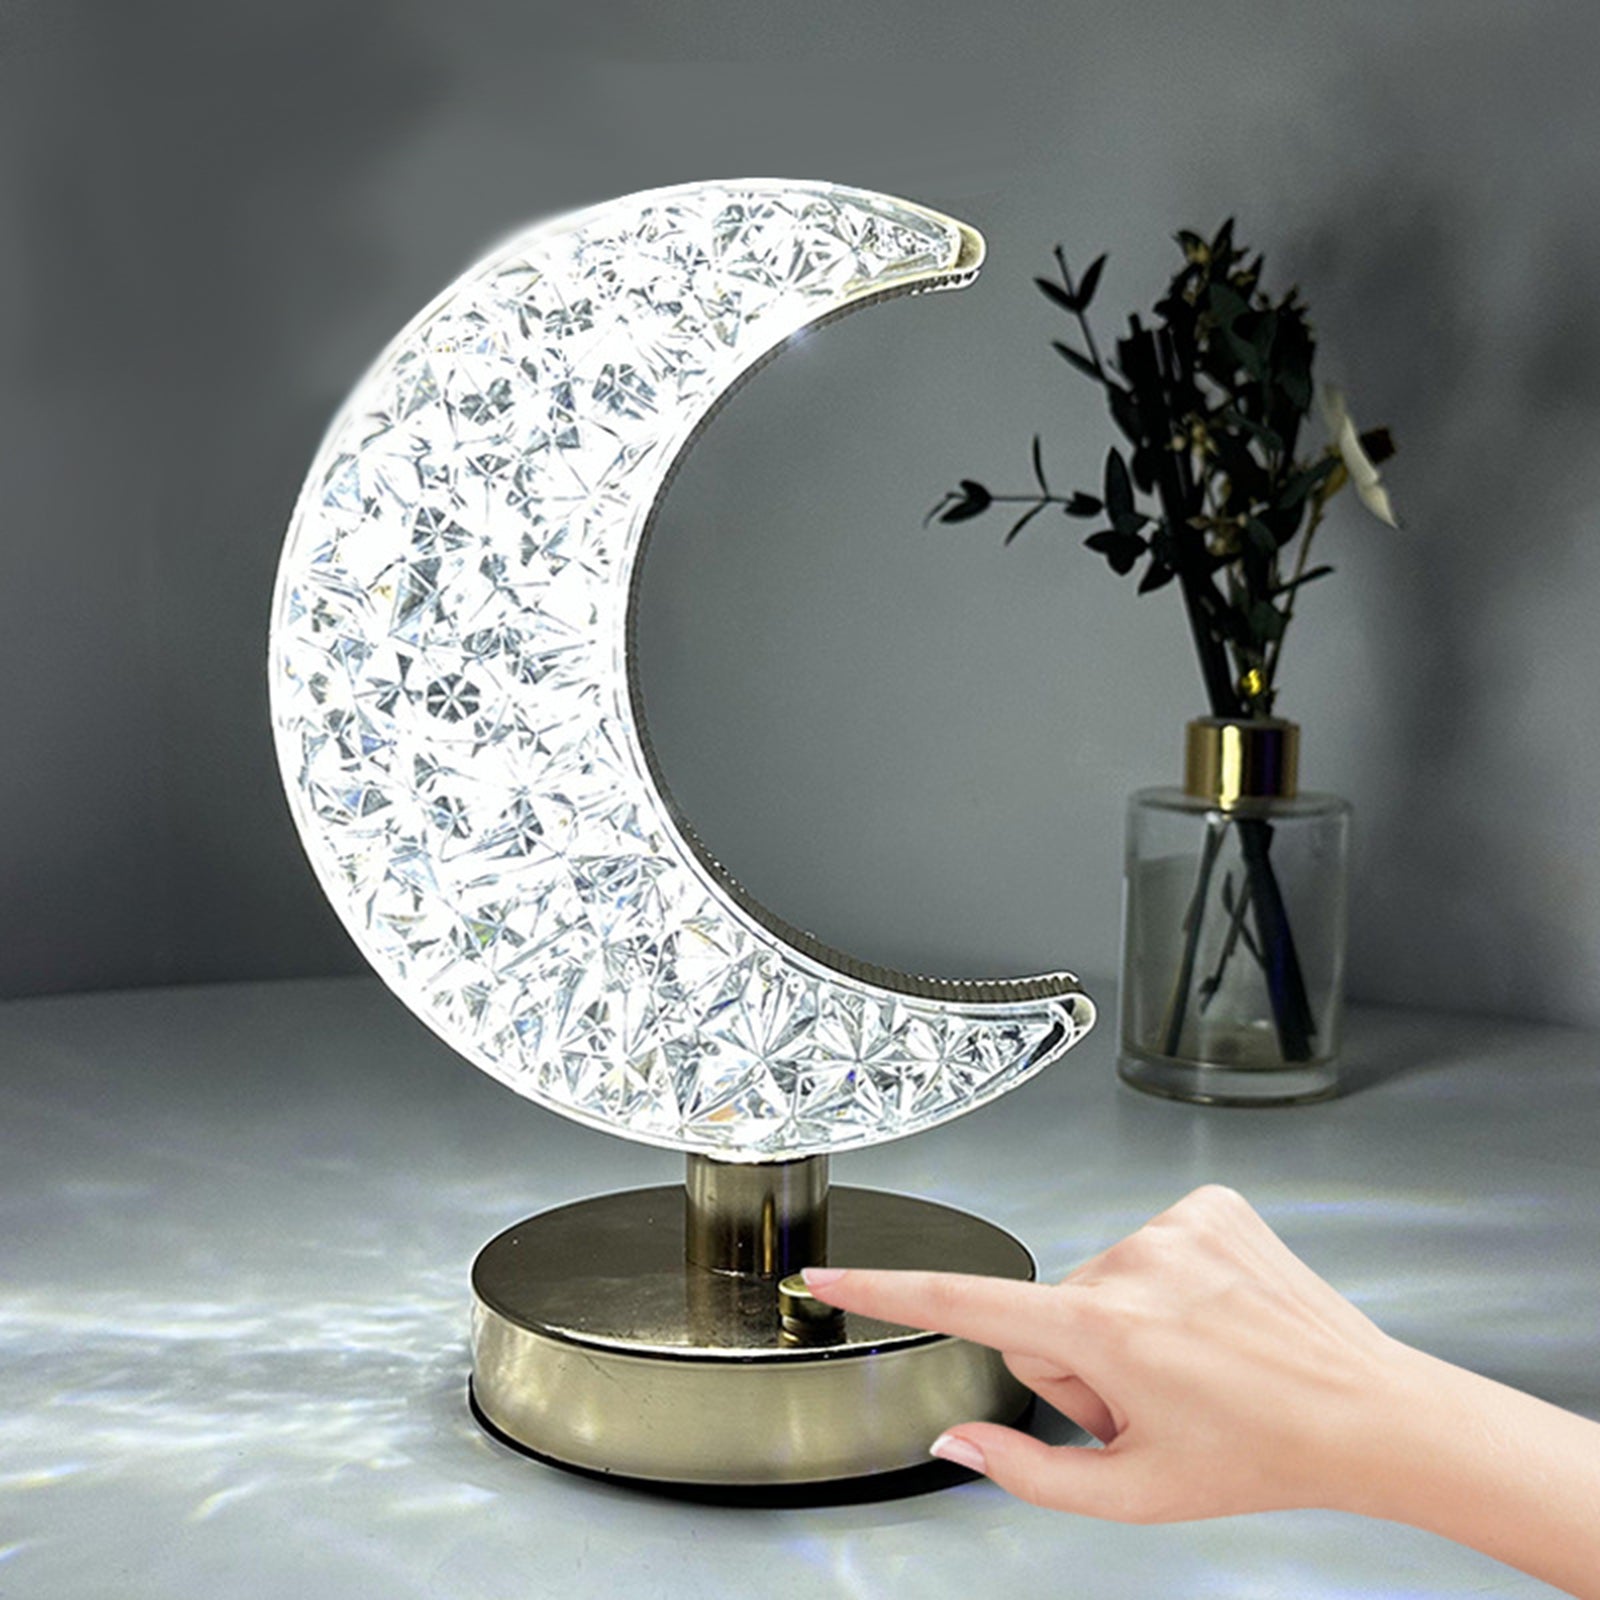 Moon Table Lamp Creative Moon Shape Crystal Night Light Bedside Lamp Romantic Desktop Nightstand Decor Lamp